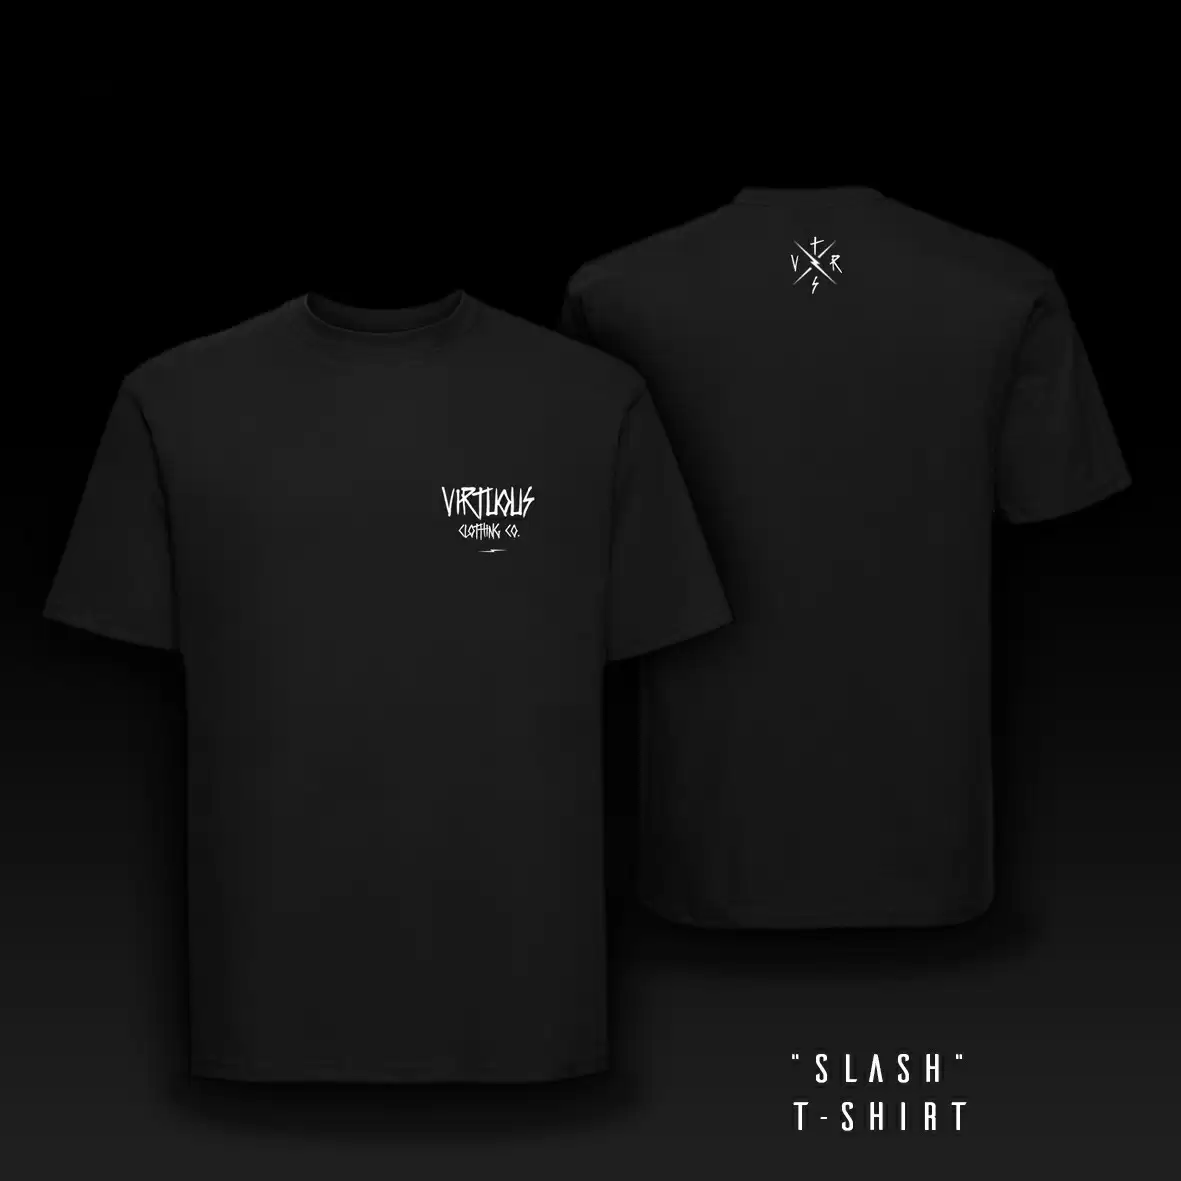 Camiseta Slash negra talla S - image